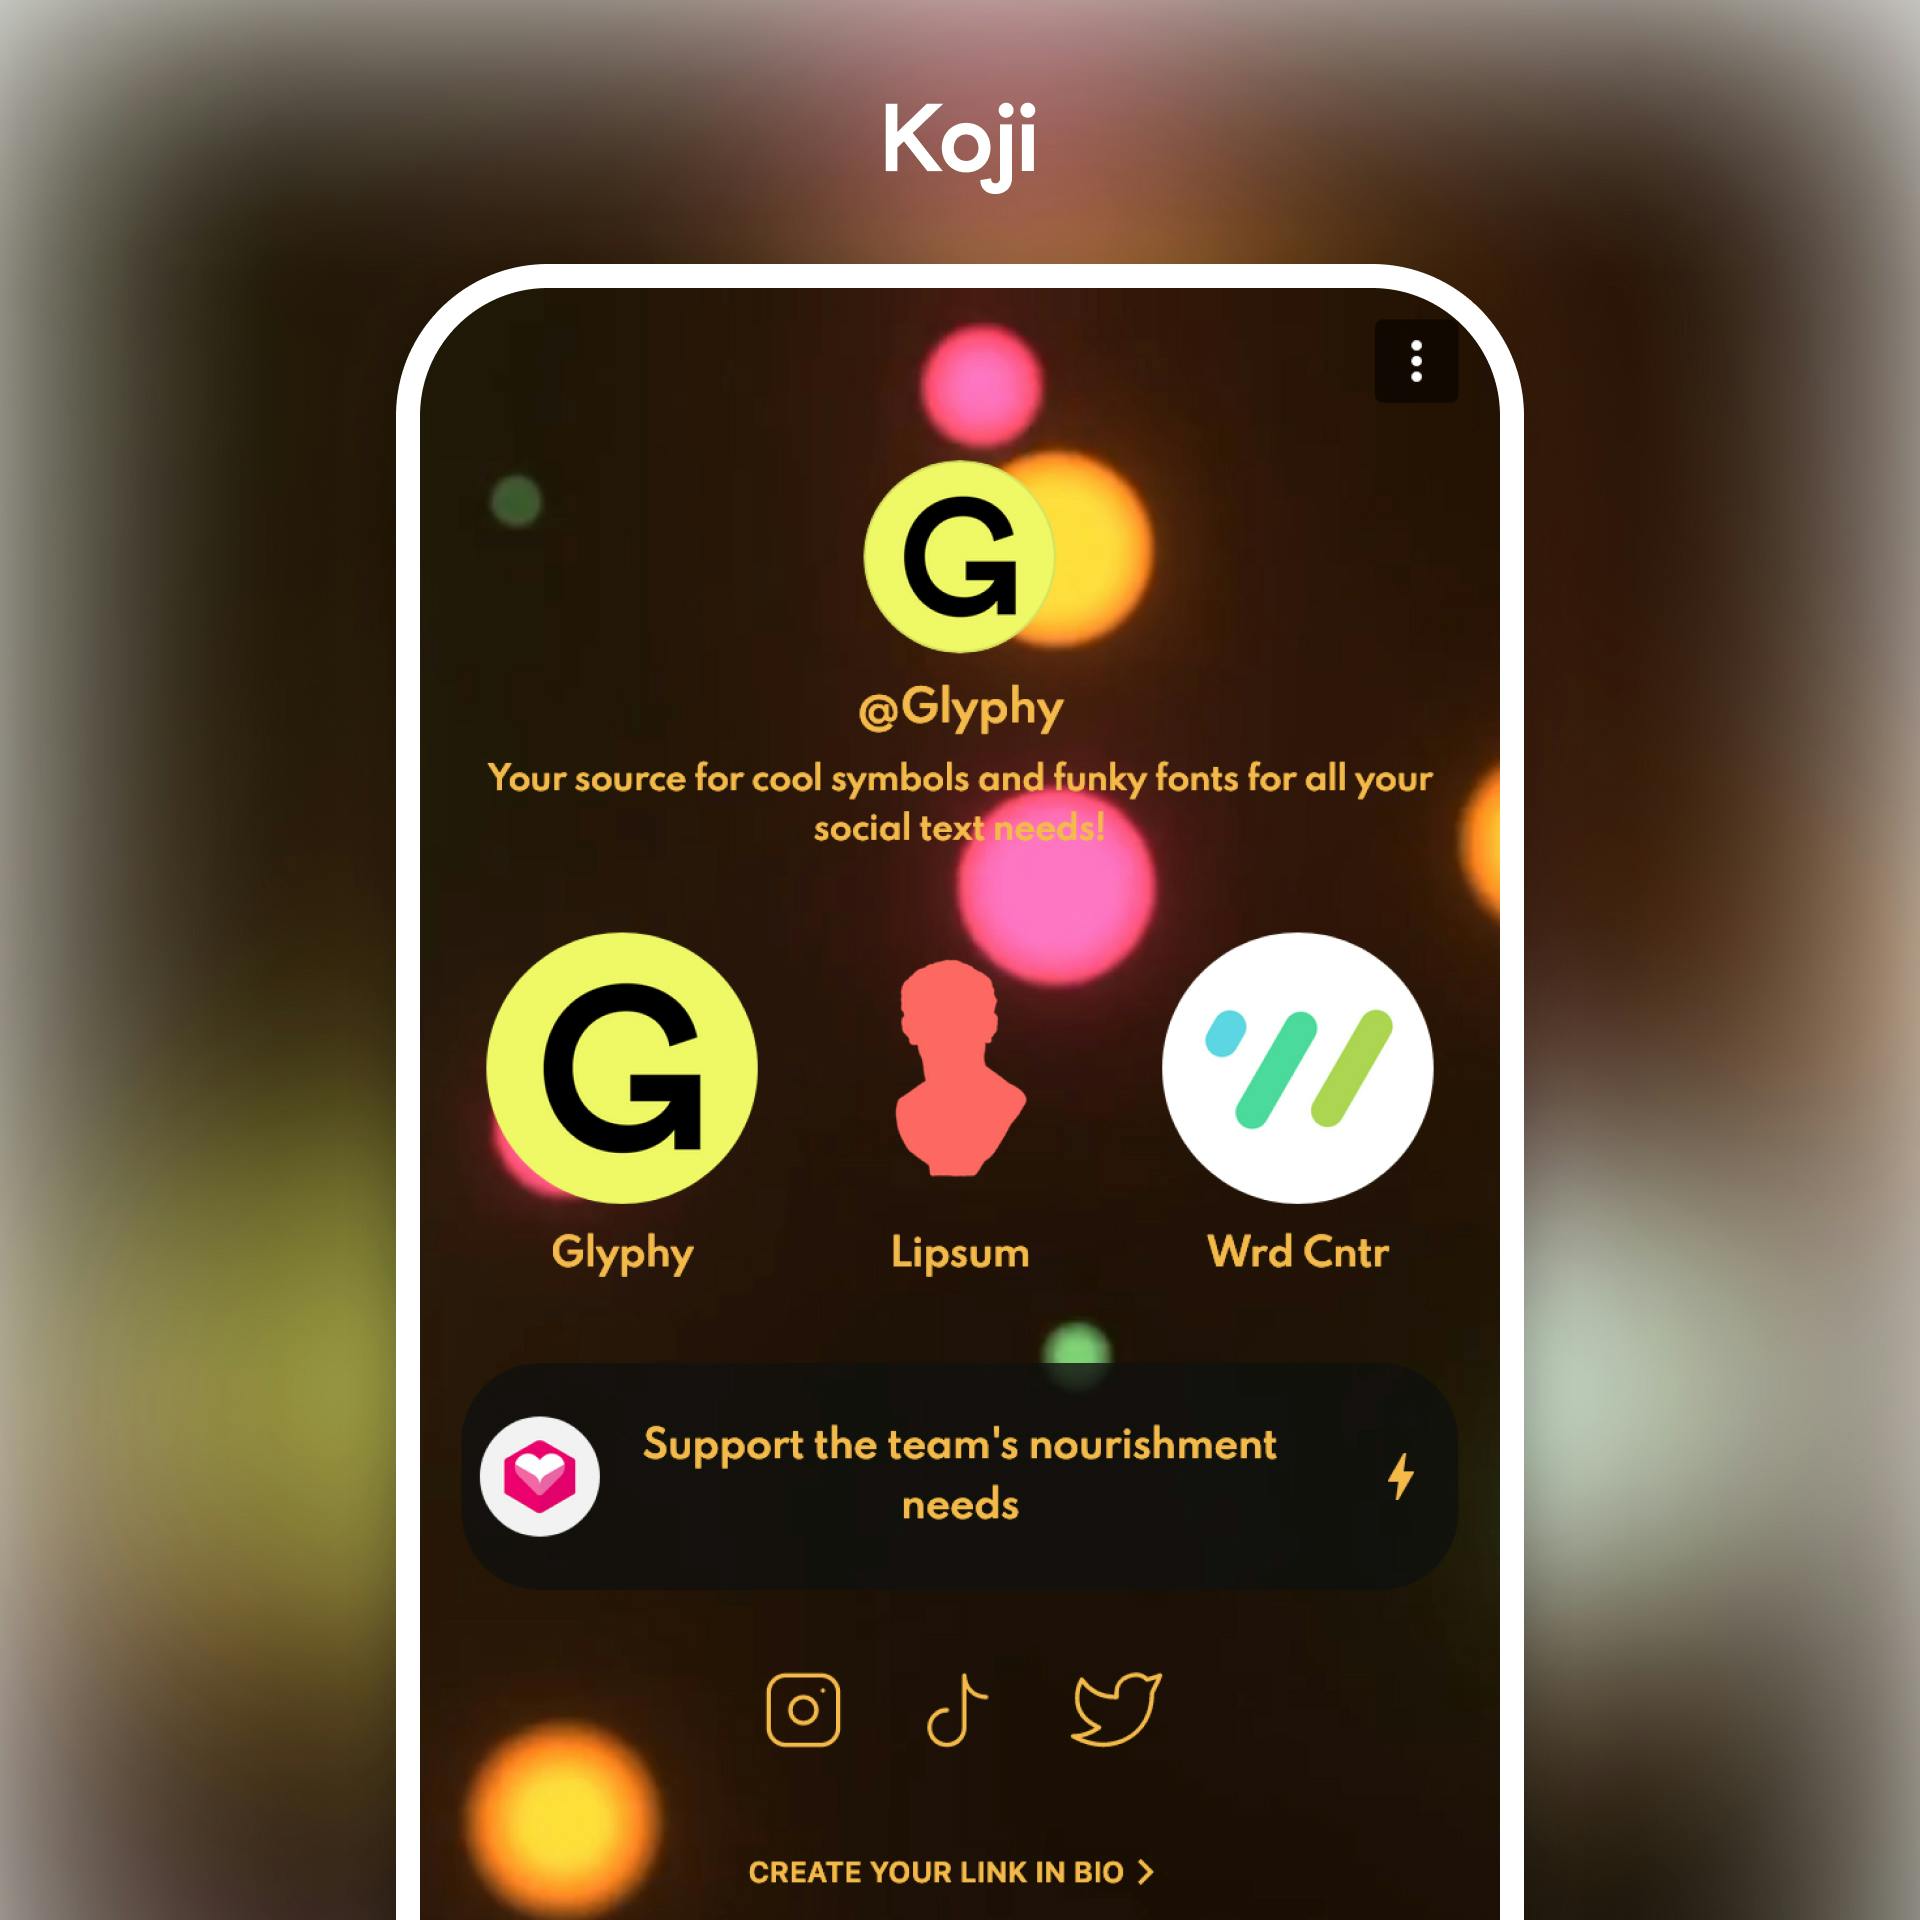 Koji link in bio tool example profile on a mobile device